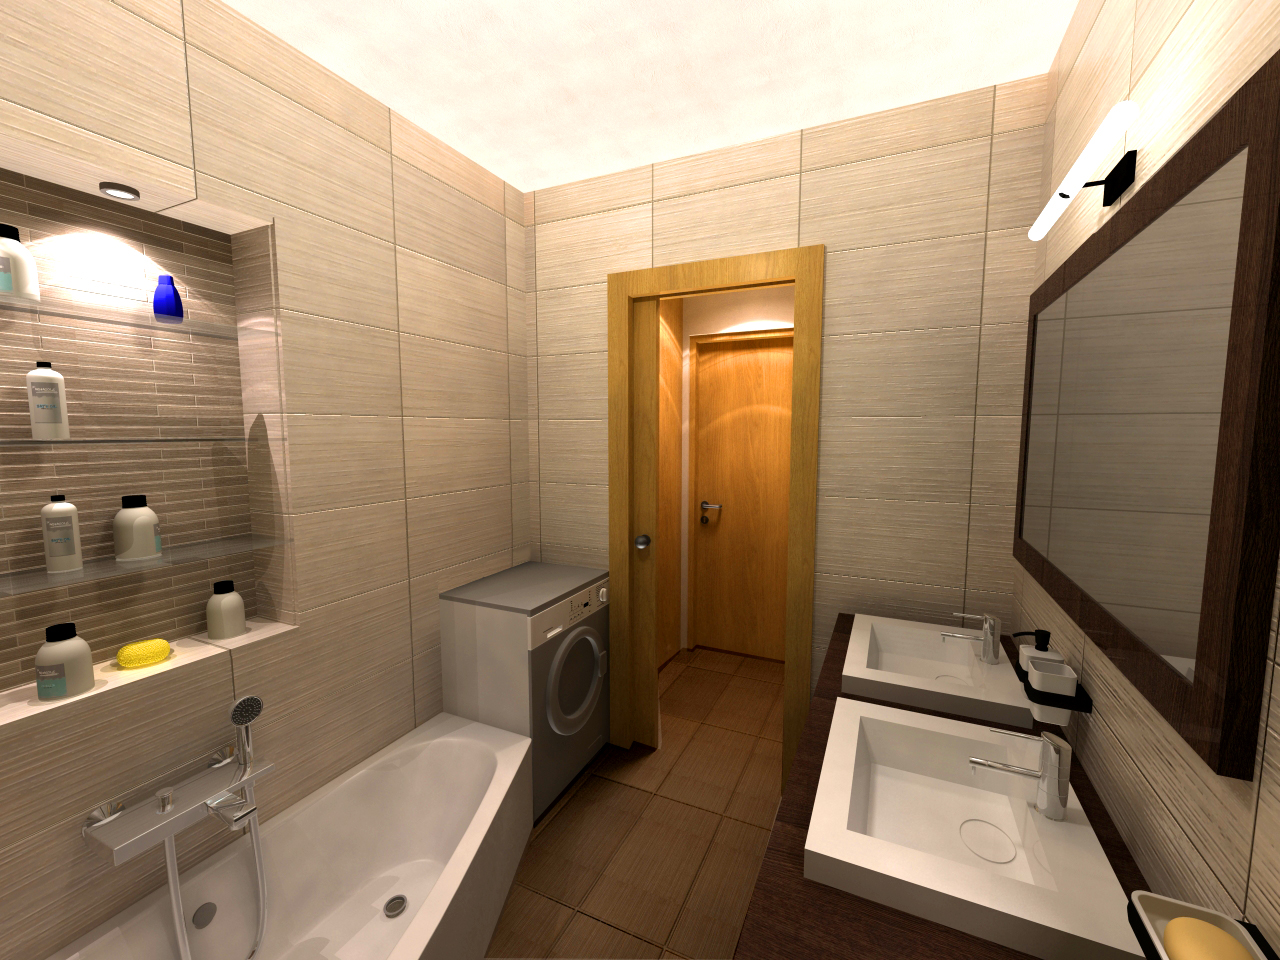 Fürdő - látványterv / Bathroom - visualization